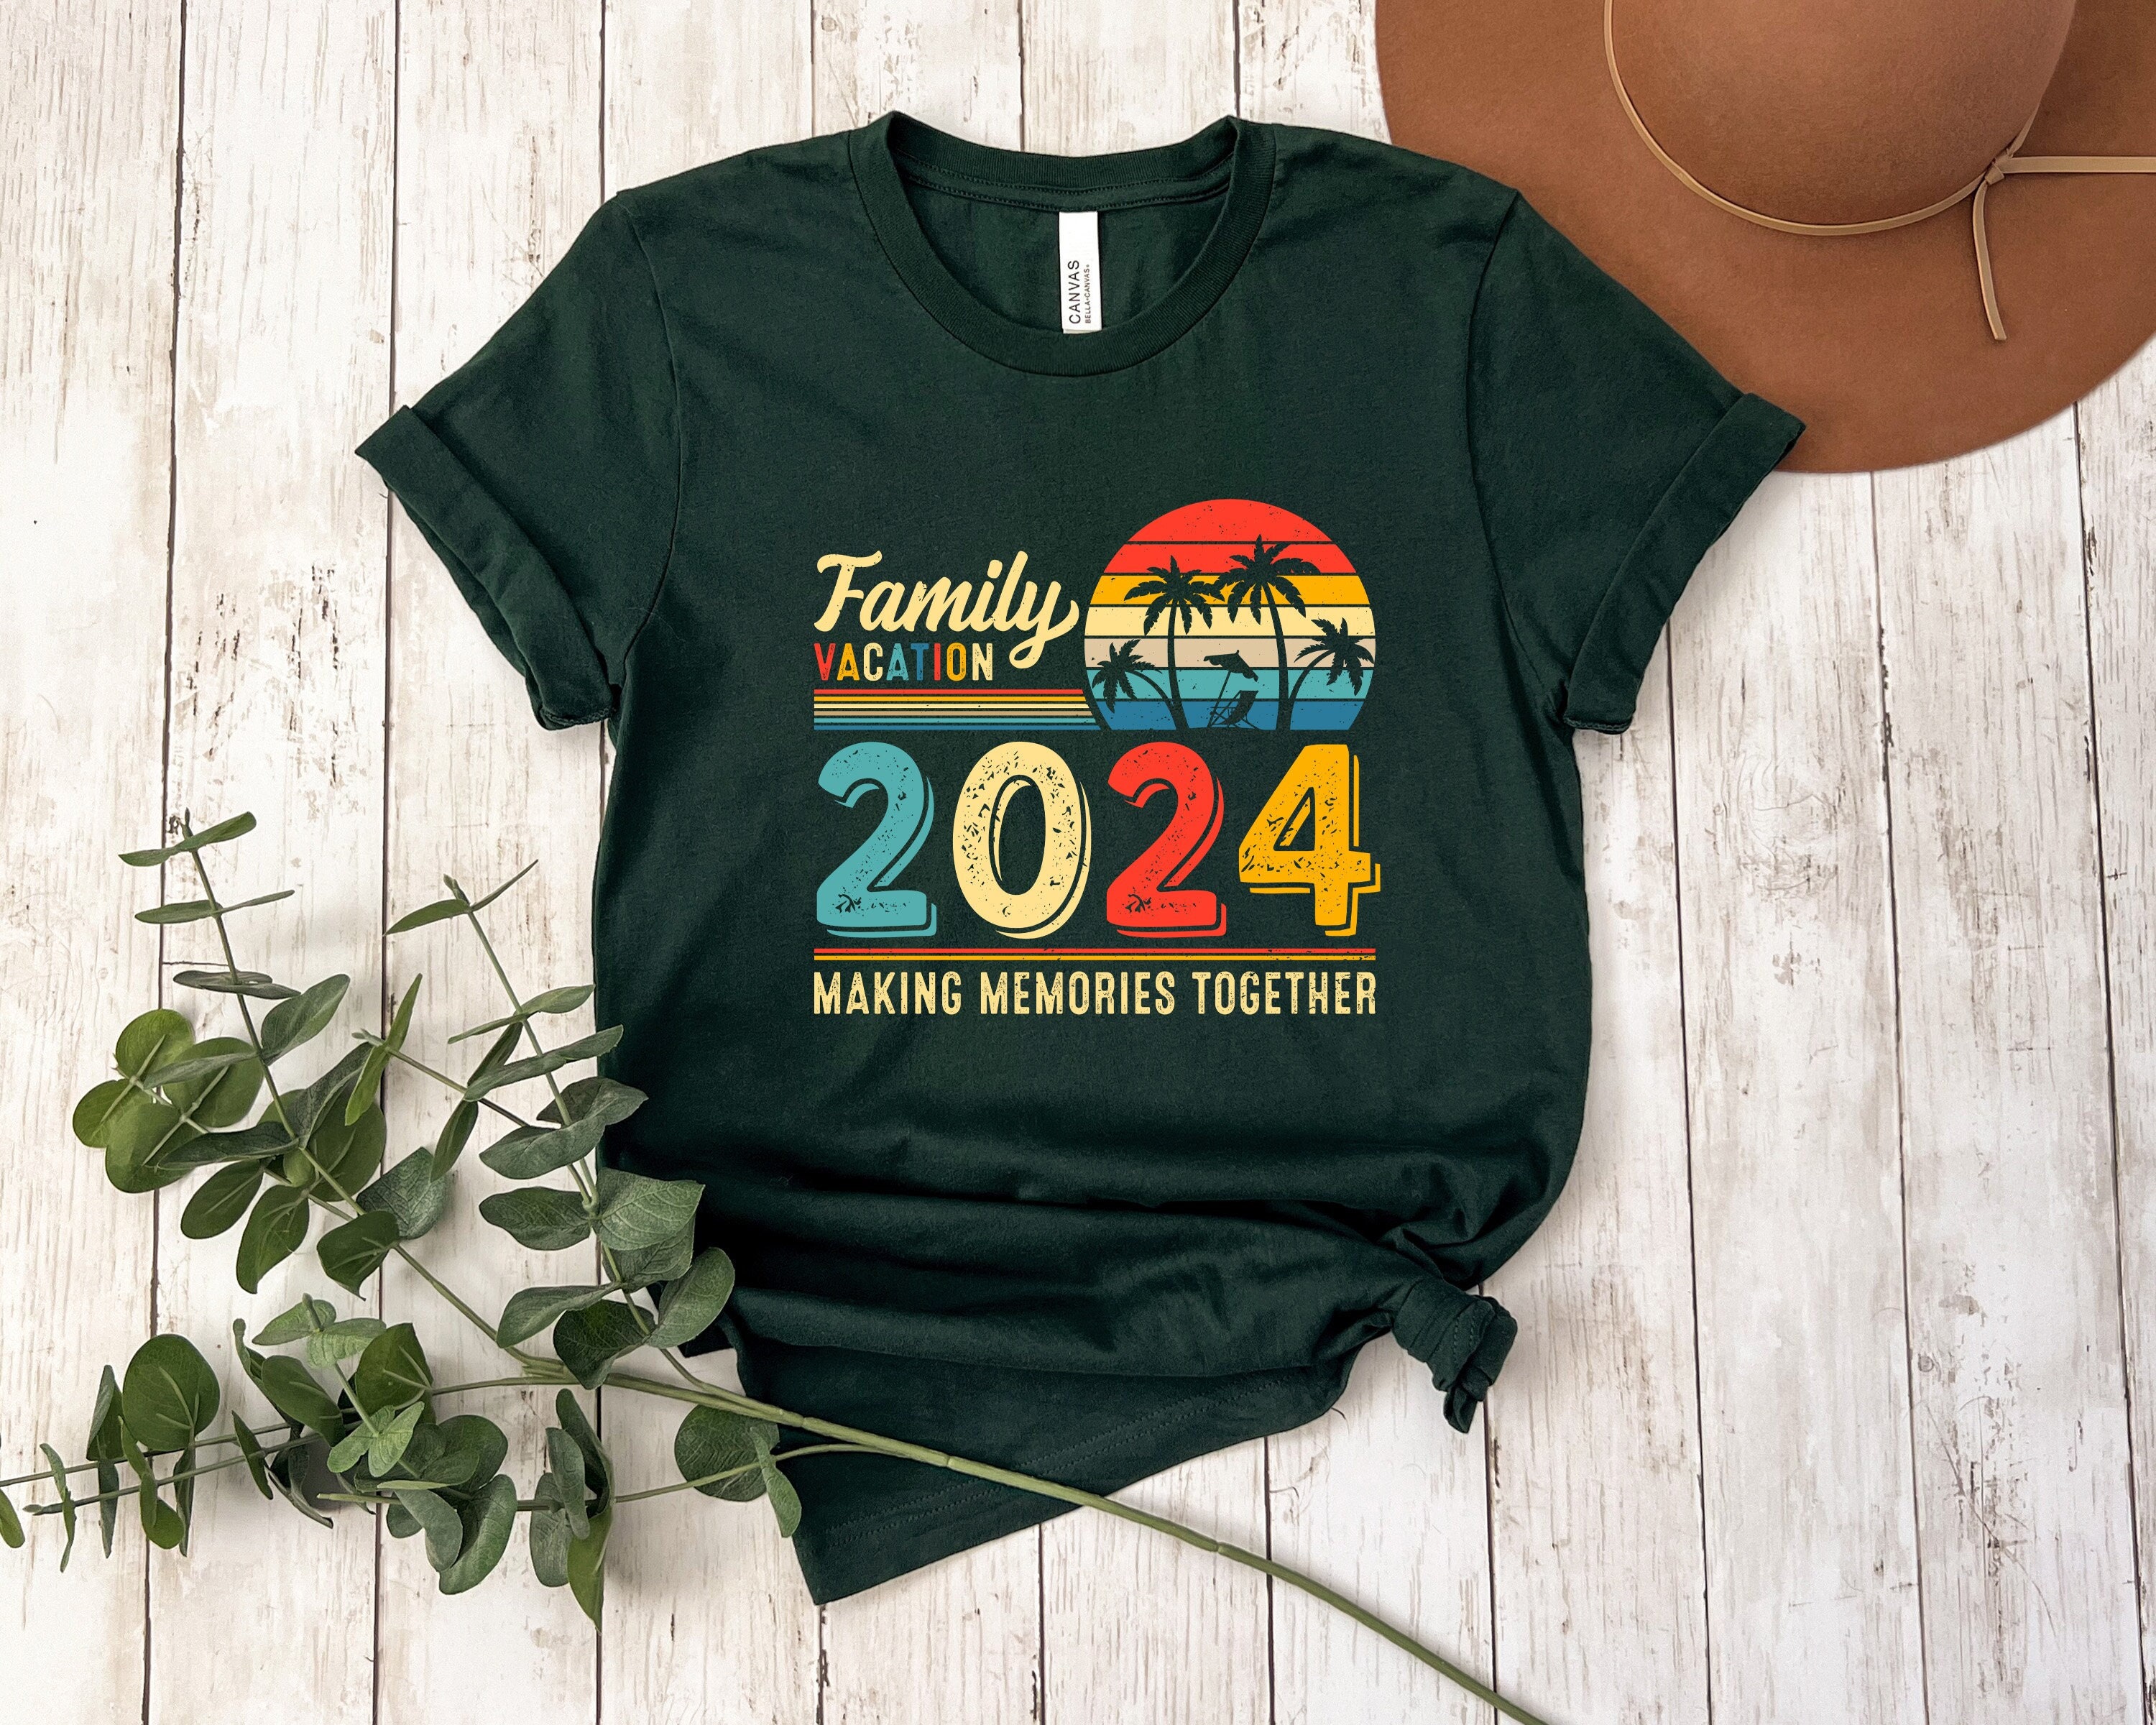 Discover Family Vacation 2024 Making Memories Together Shirt, Family Cruise Shirts, Family Holiday Shirt, Summer Vacation Tee, Family Travel Shirt